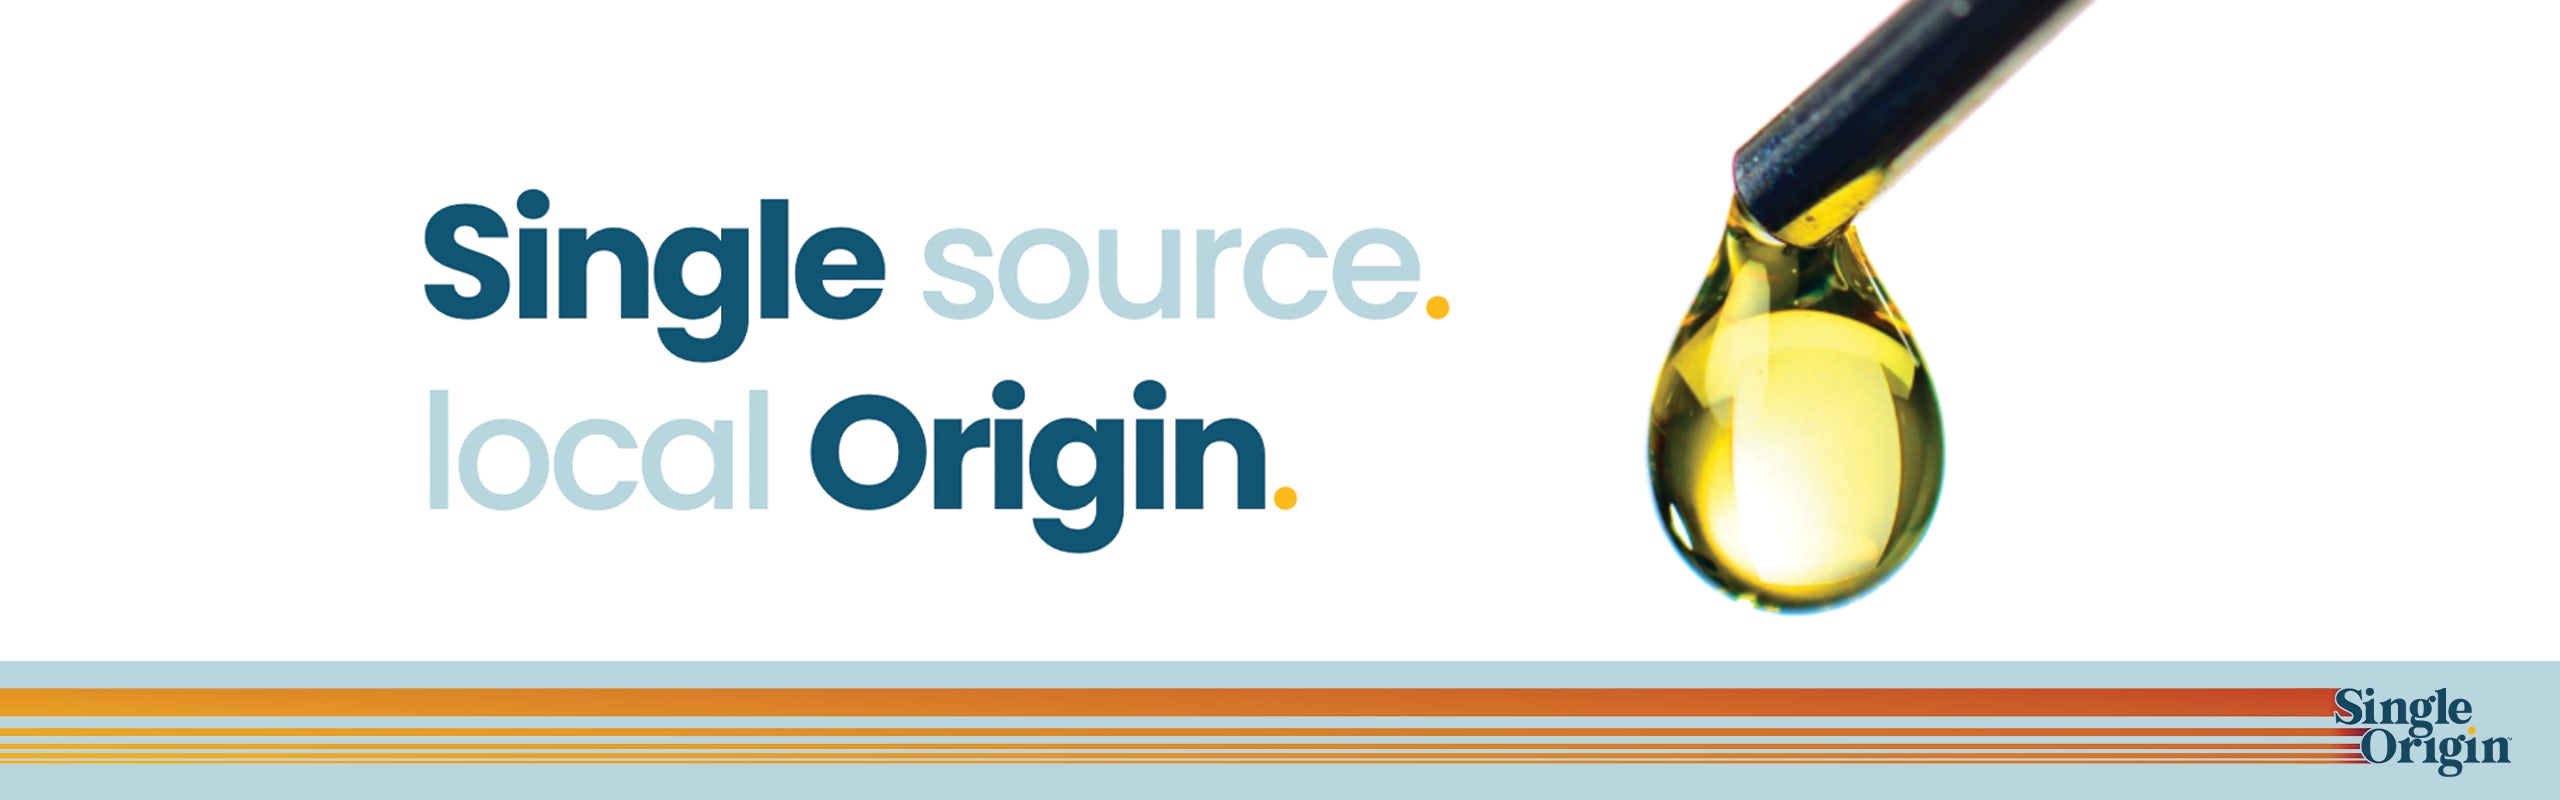 Single Origin banner